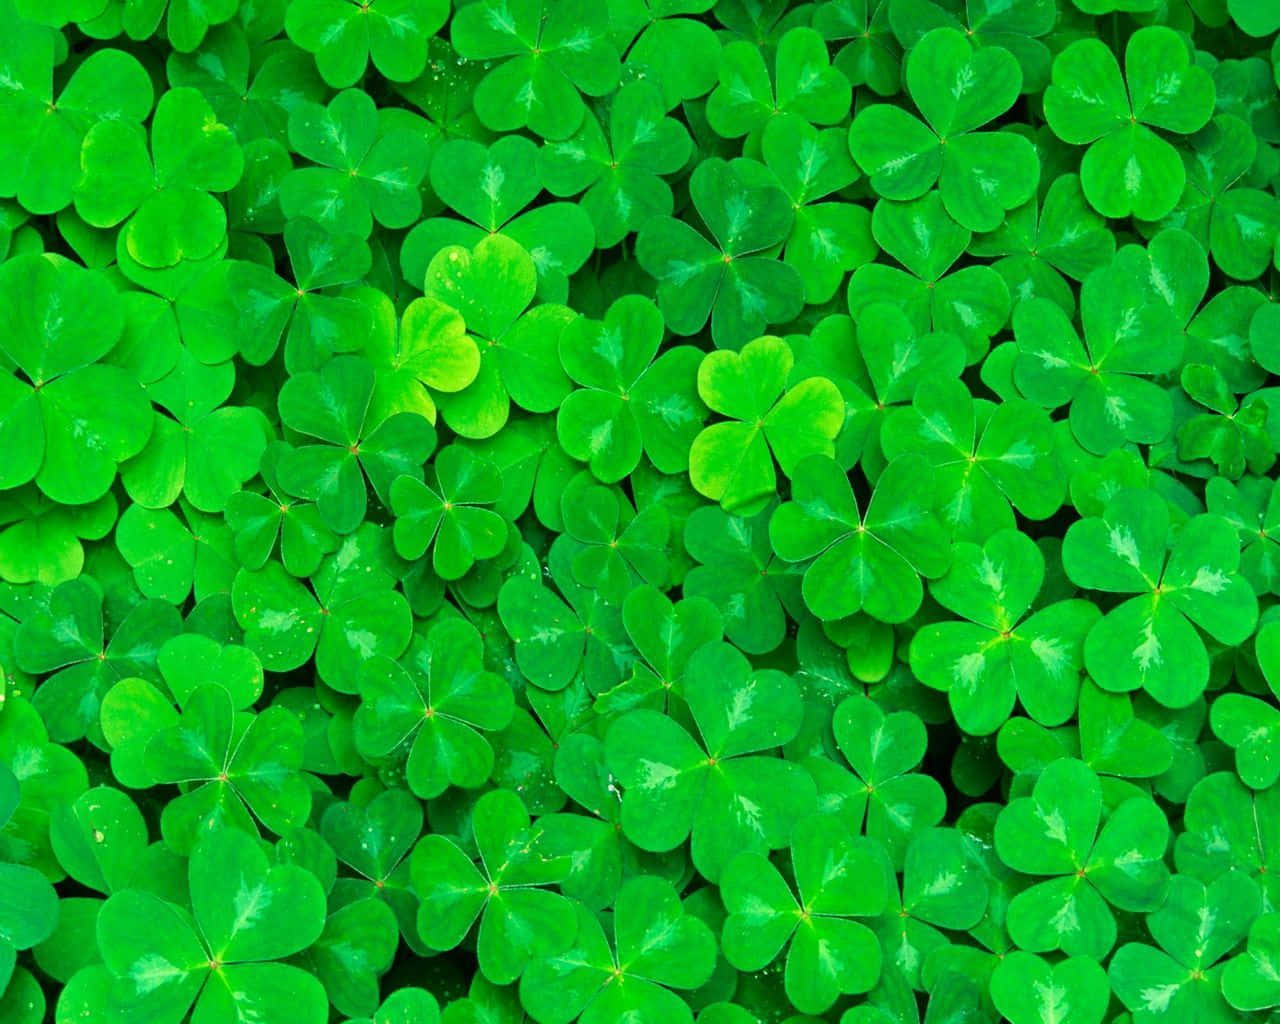 “The Luck of the Irish” Wallpaper